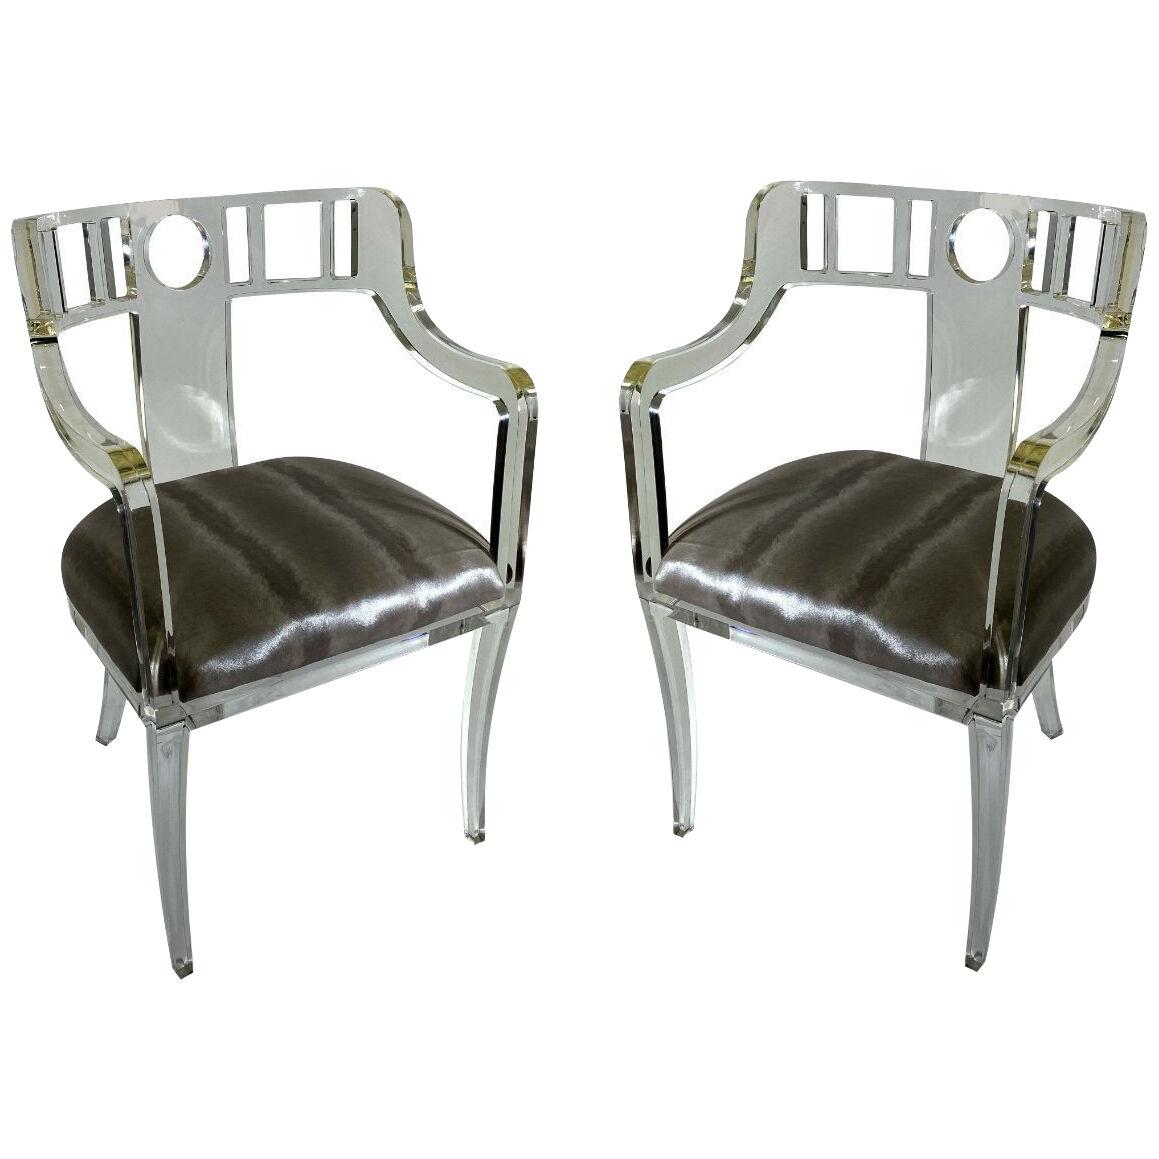 Pair of American Modern Lucite Chair Armchairs, Geoffrey Bradfield